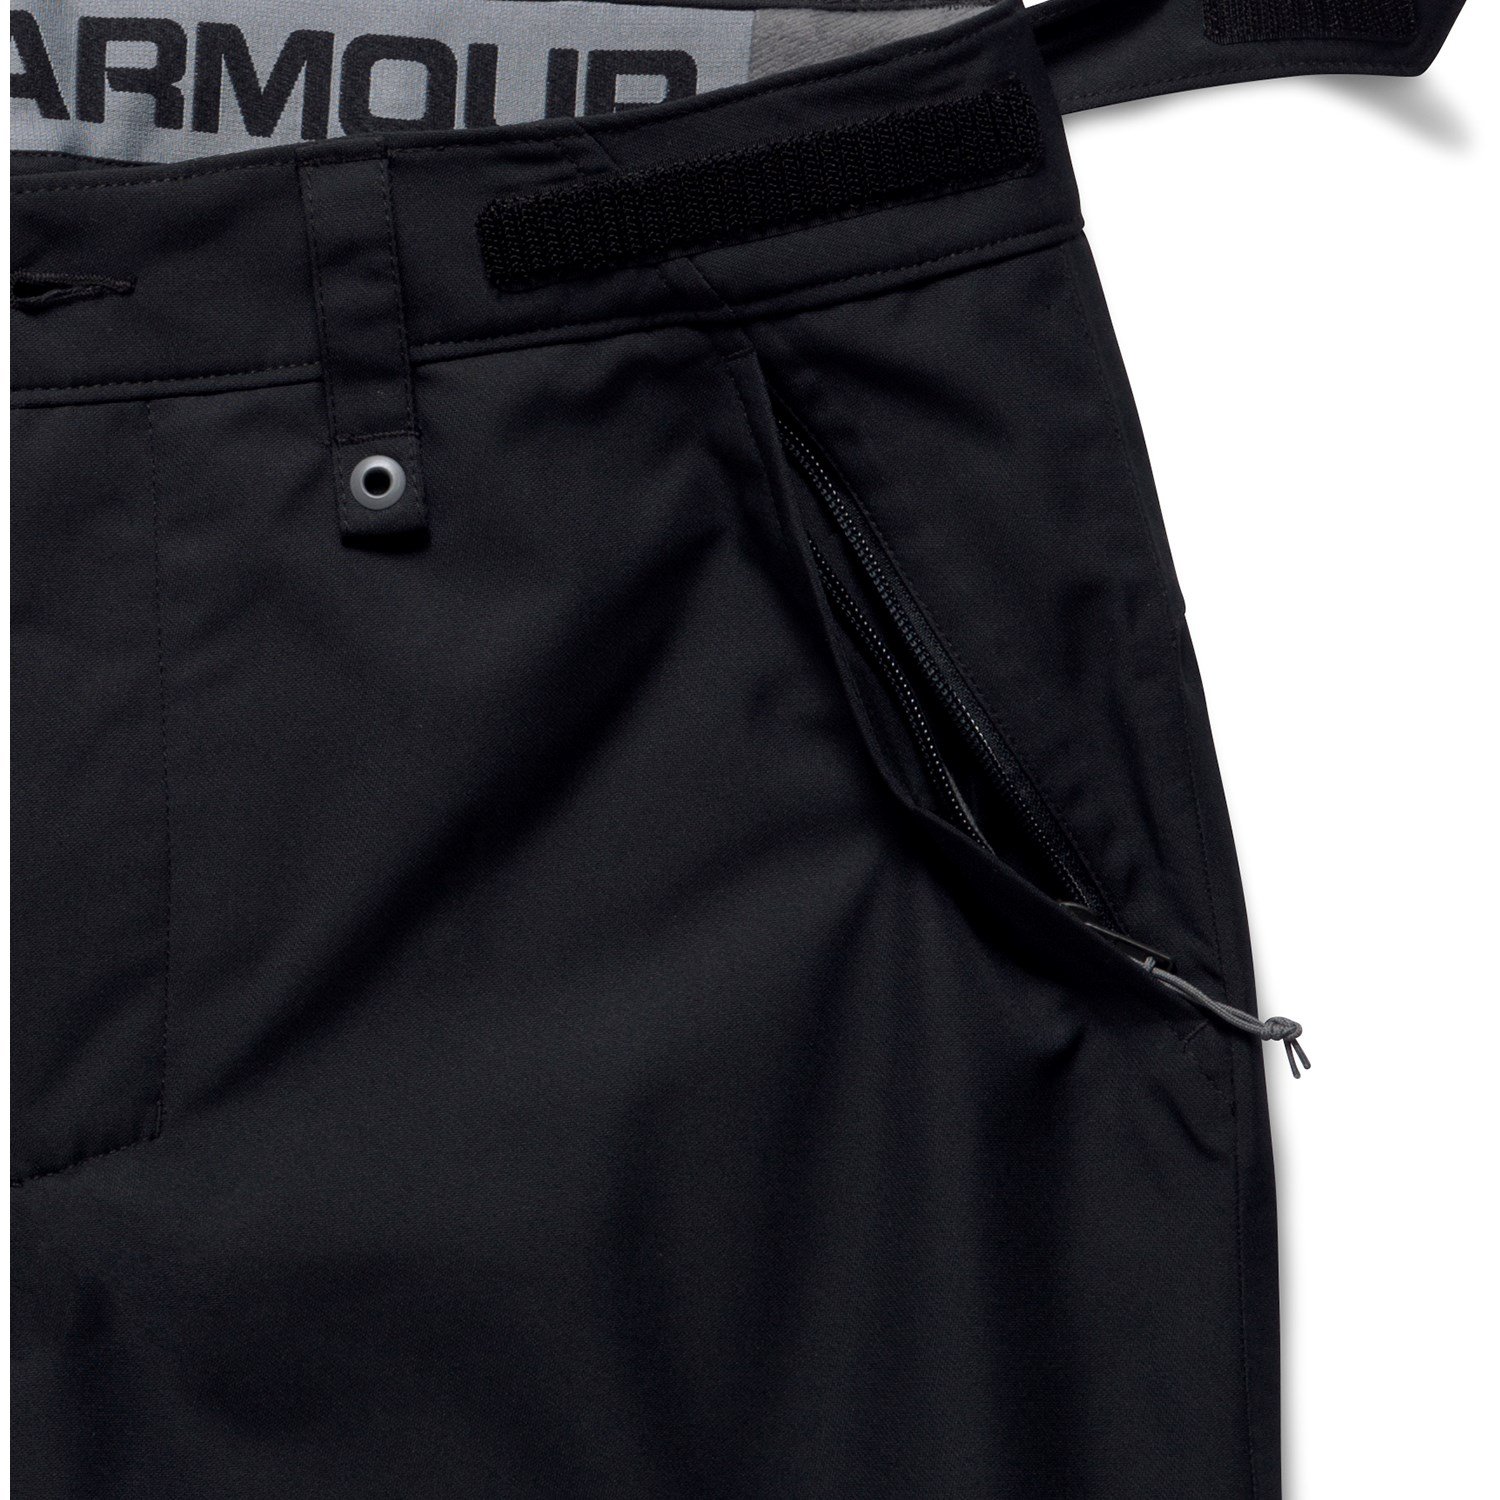 under armour zipper pocket shorts